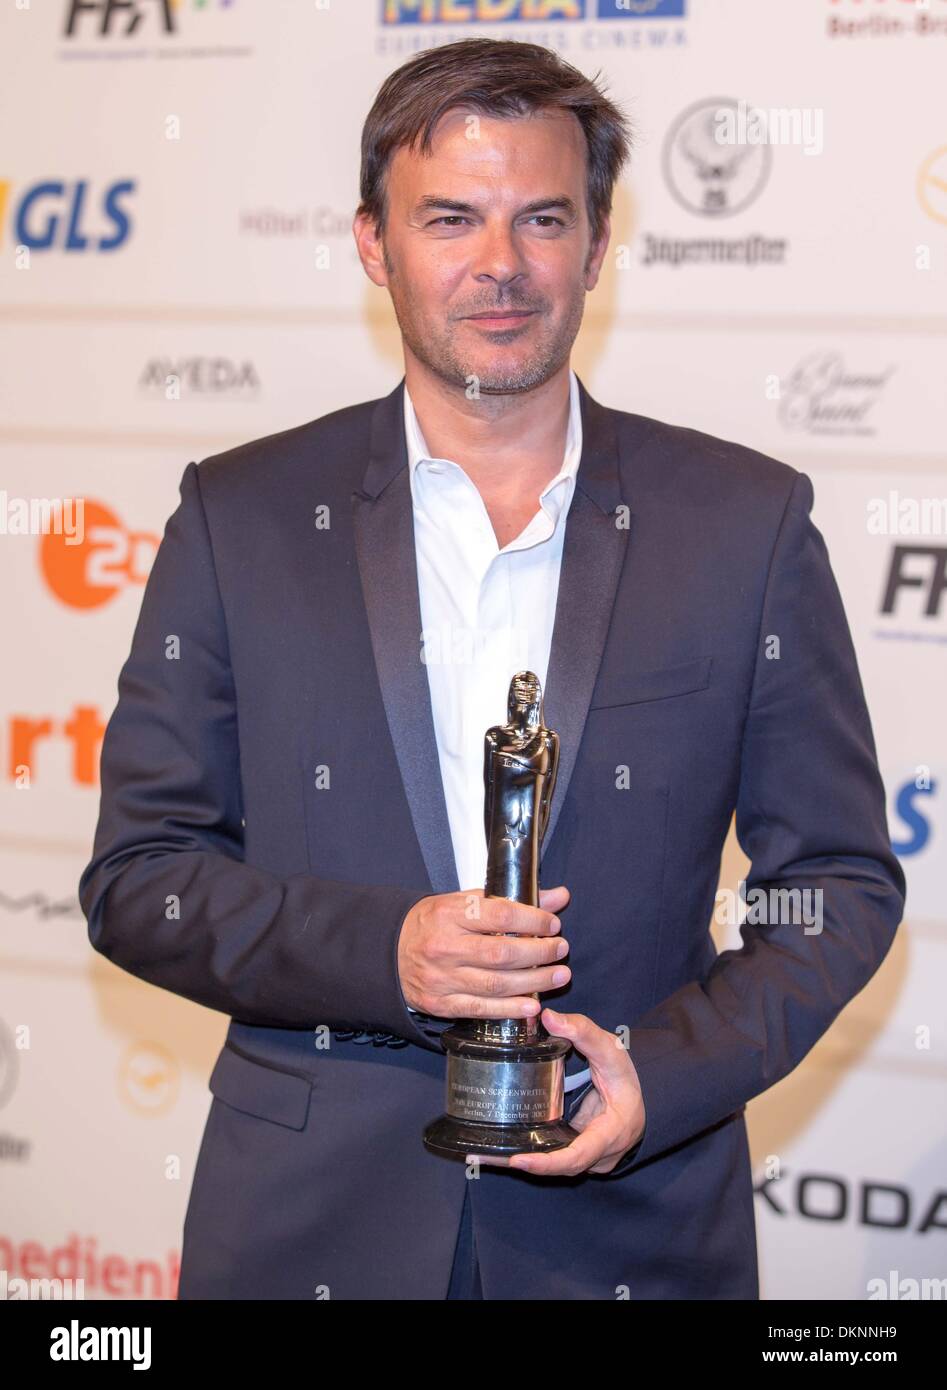 Berlín, Alemania. 7 dic, 2013. François Ozon.26th European Film Awards.Berlín, Alemania.El 7 de diciembre de 2013. Crédito: Roger Harvey/Globe Photos/ZUMAPRESS.com/Alamy Live News Foto de stock